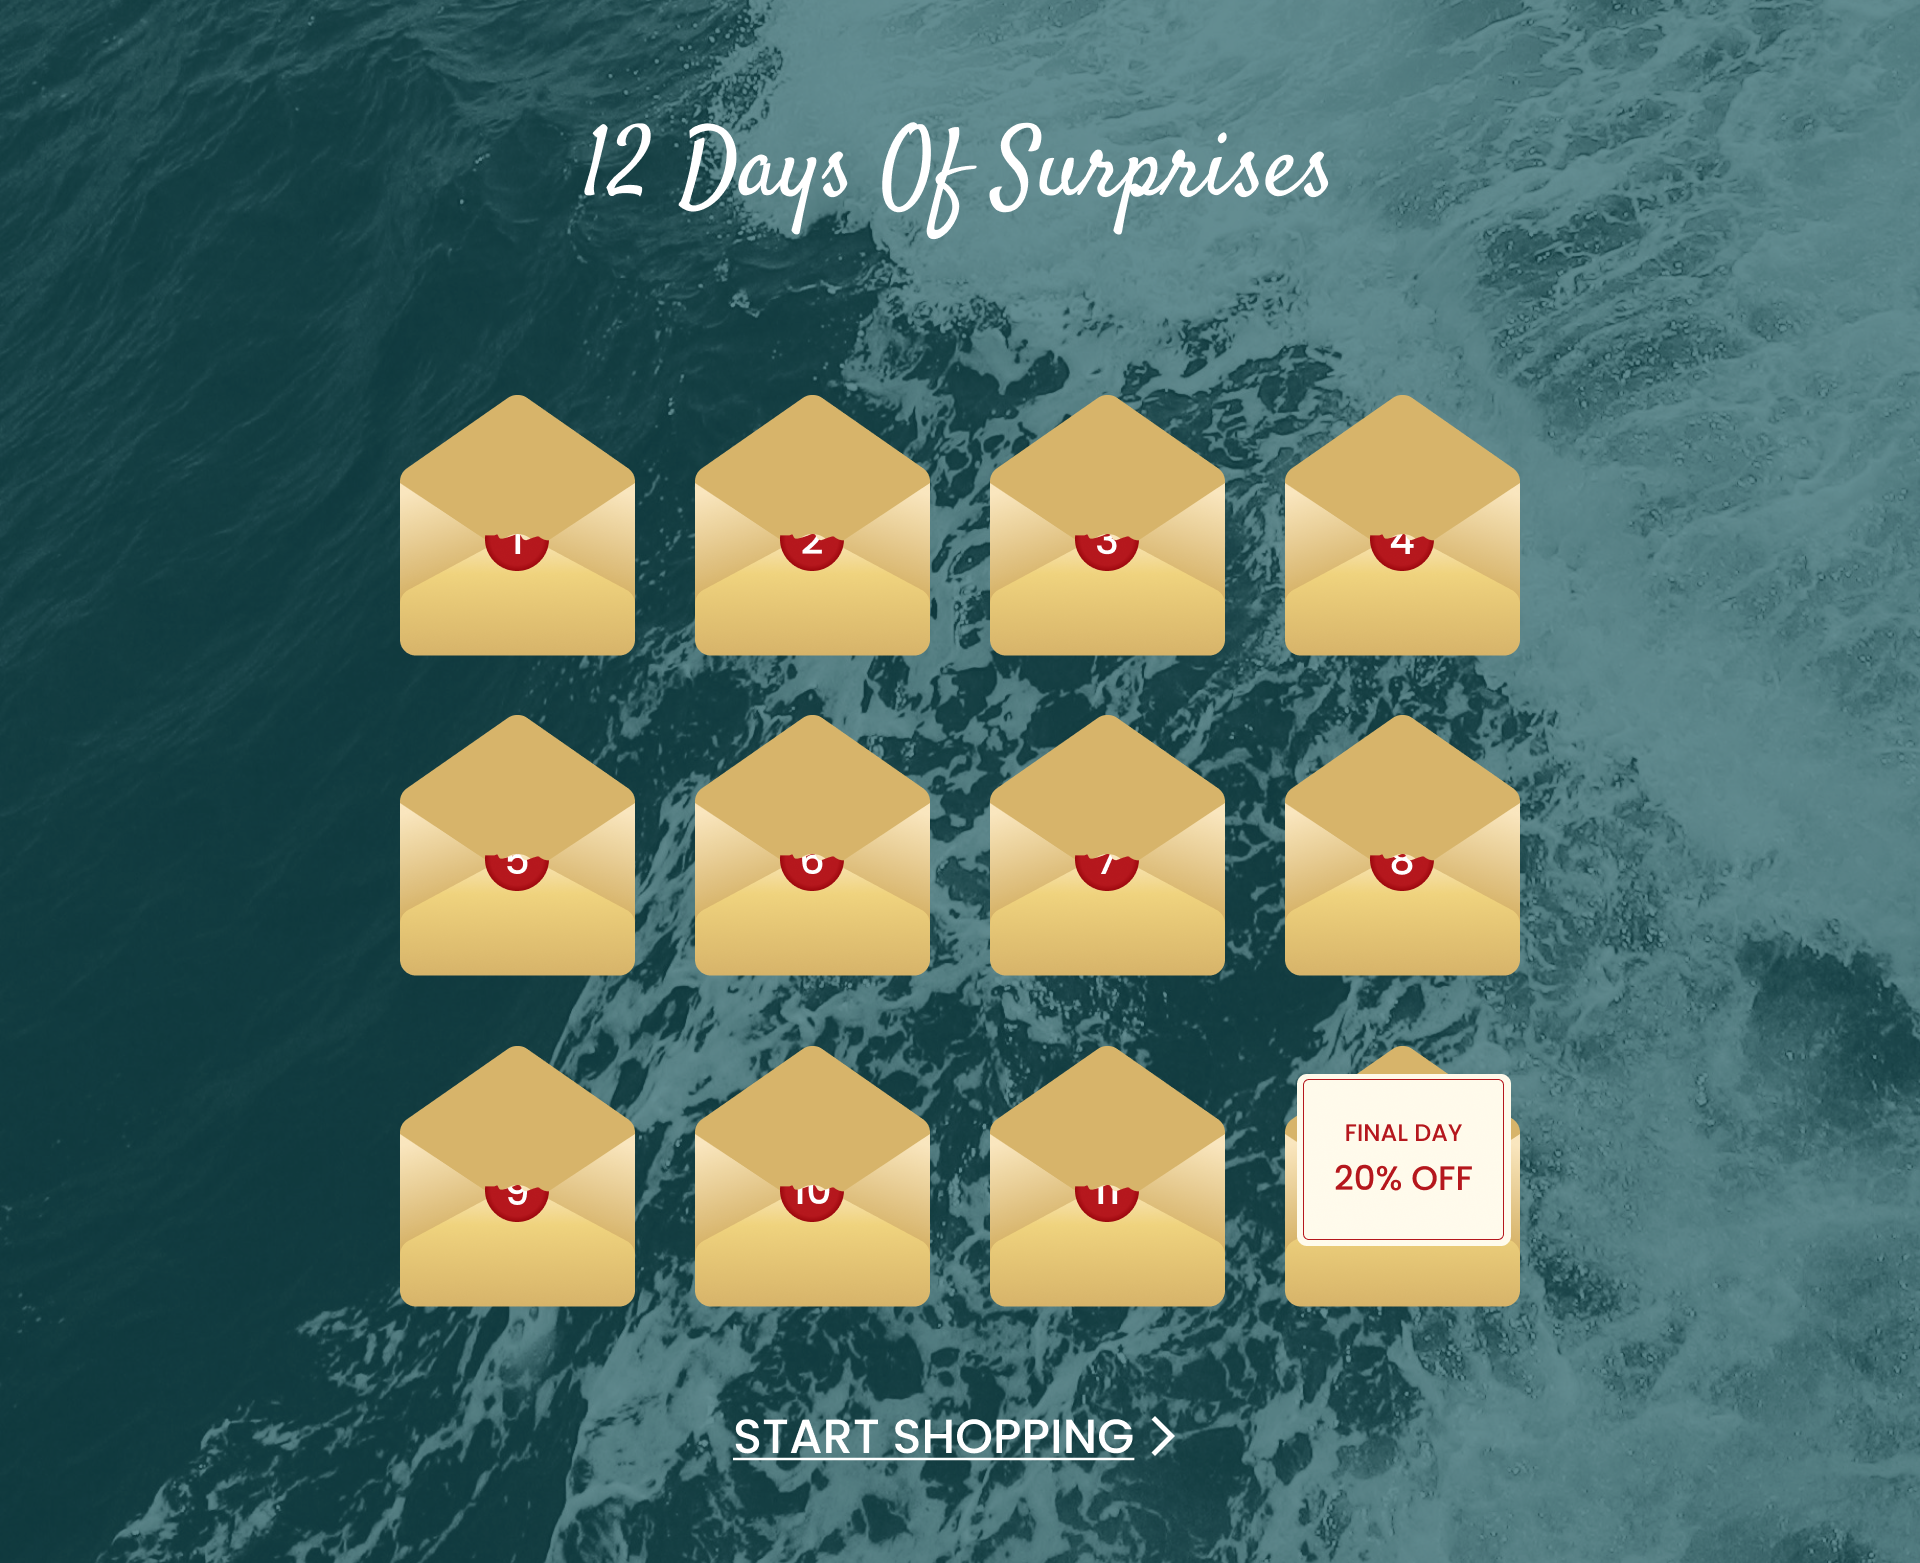 12 Days of surprises